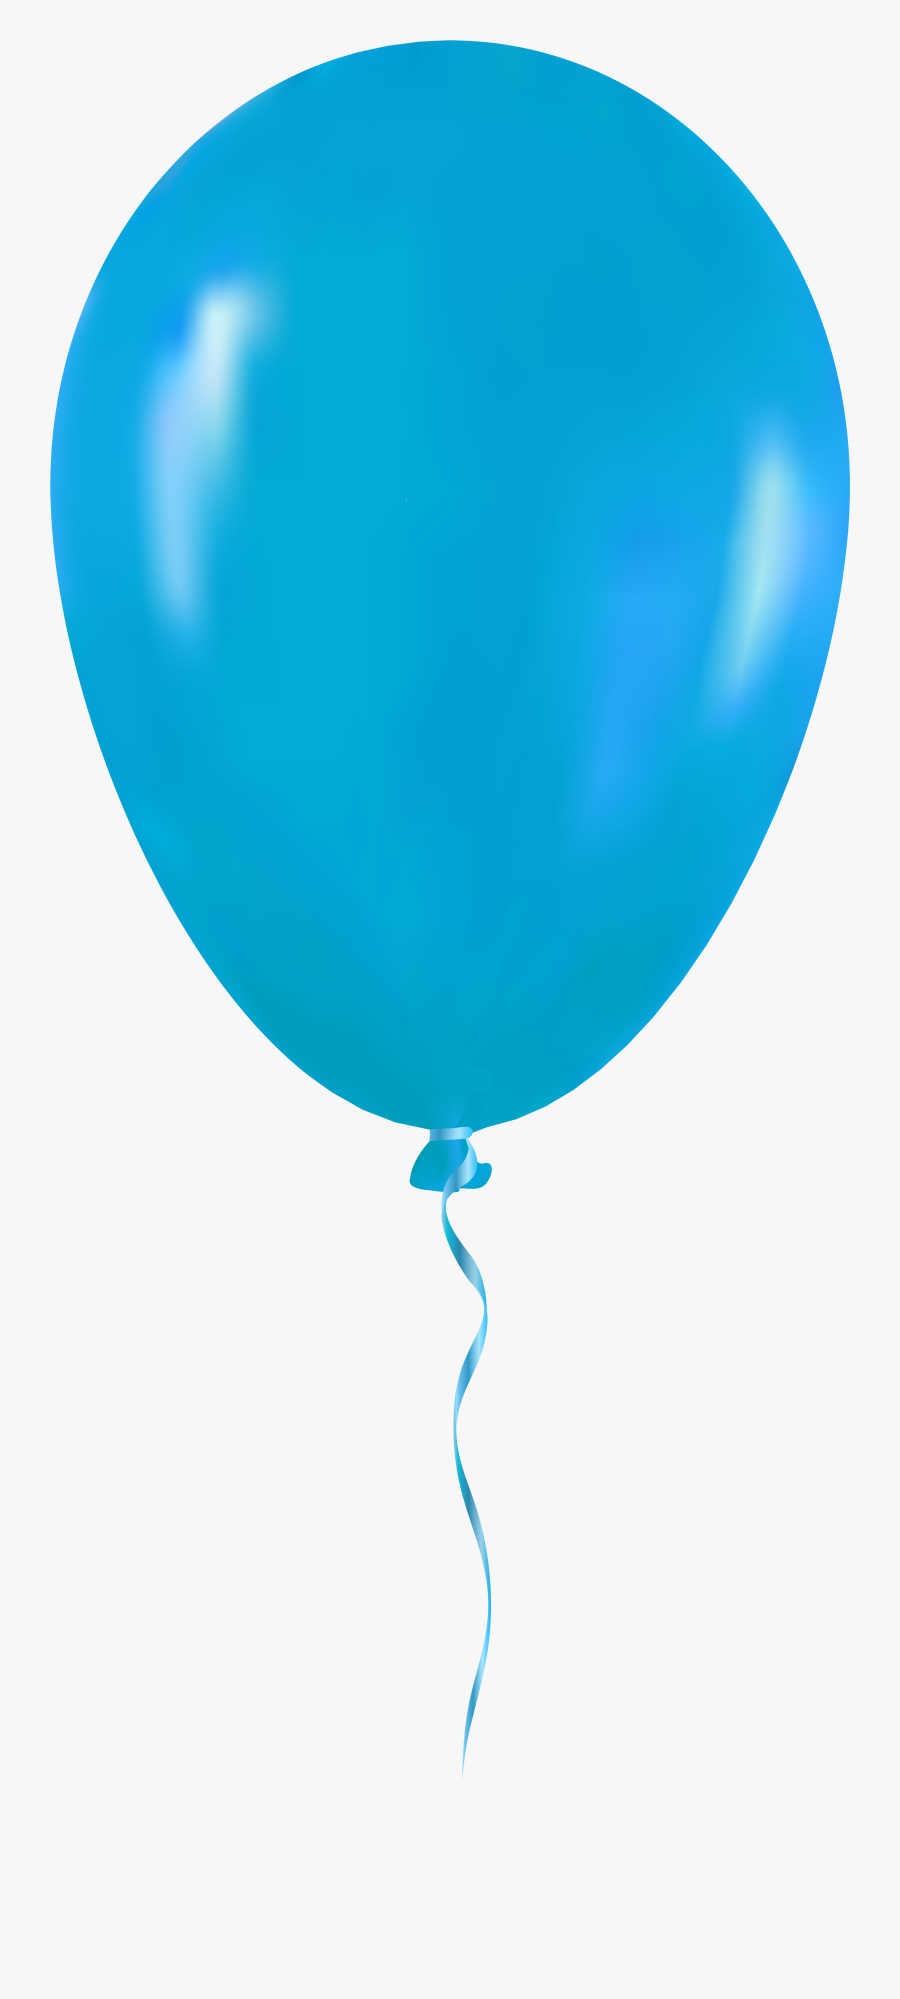 Single Balloon Transparent Background Png, Transparent Clipart